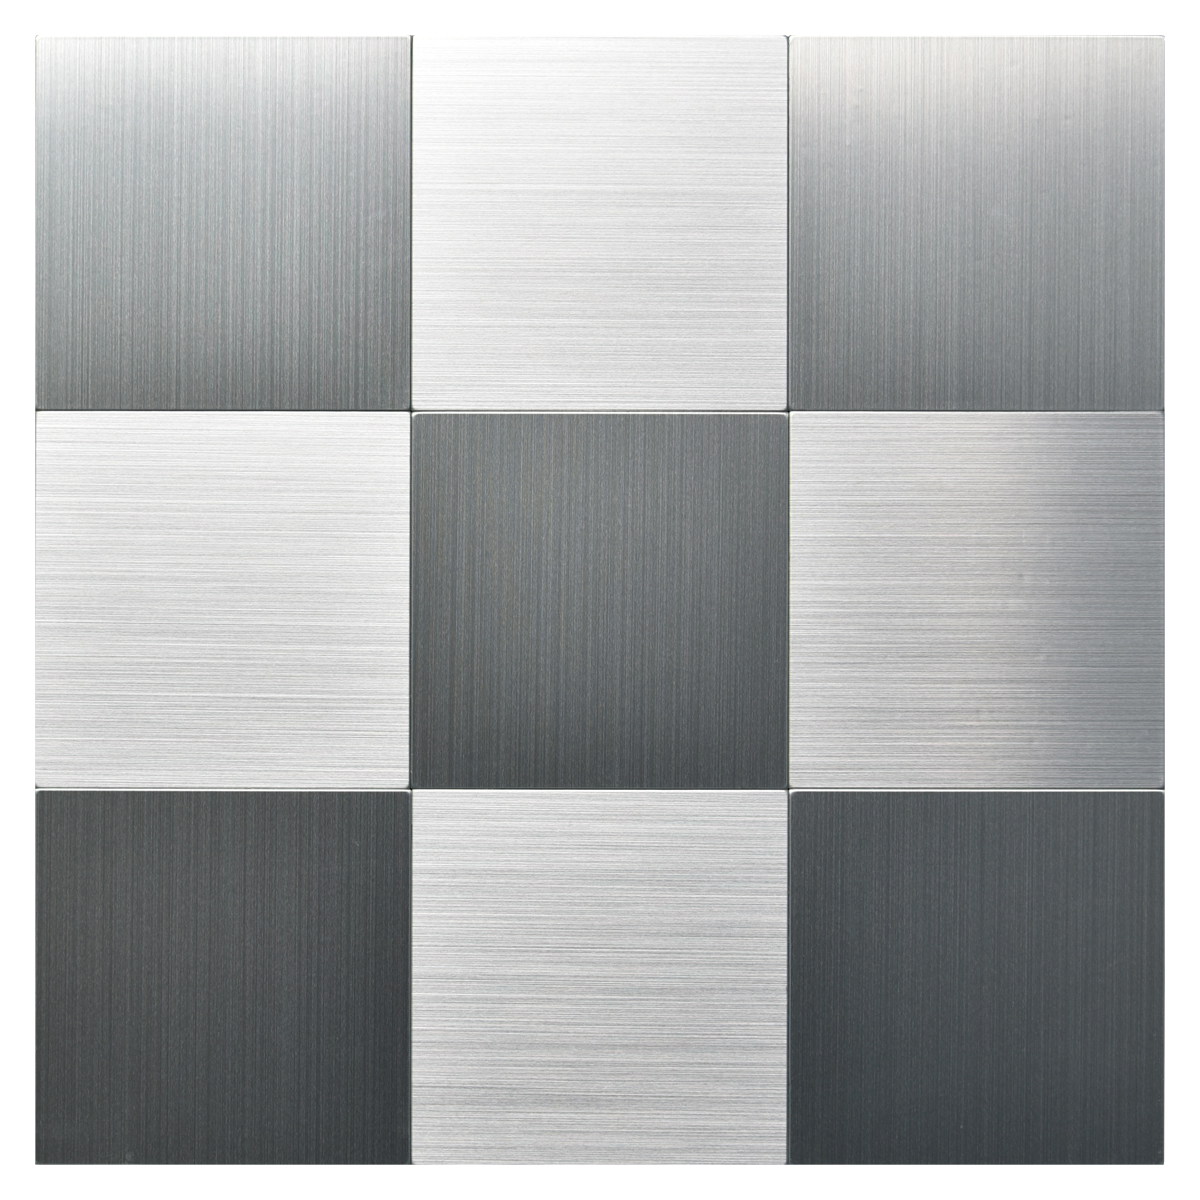 Peel and Stick Metal Backsplash Tile, Brushed Stainless Steel in Square 10 Tiles 12